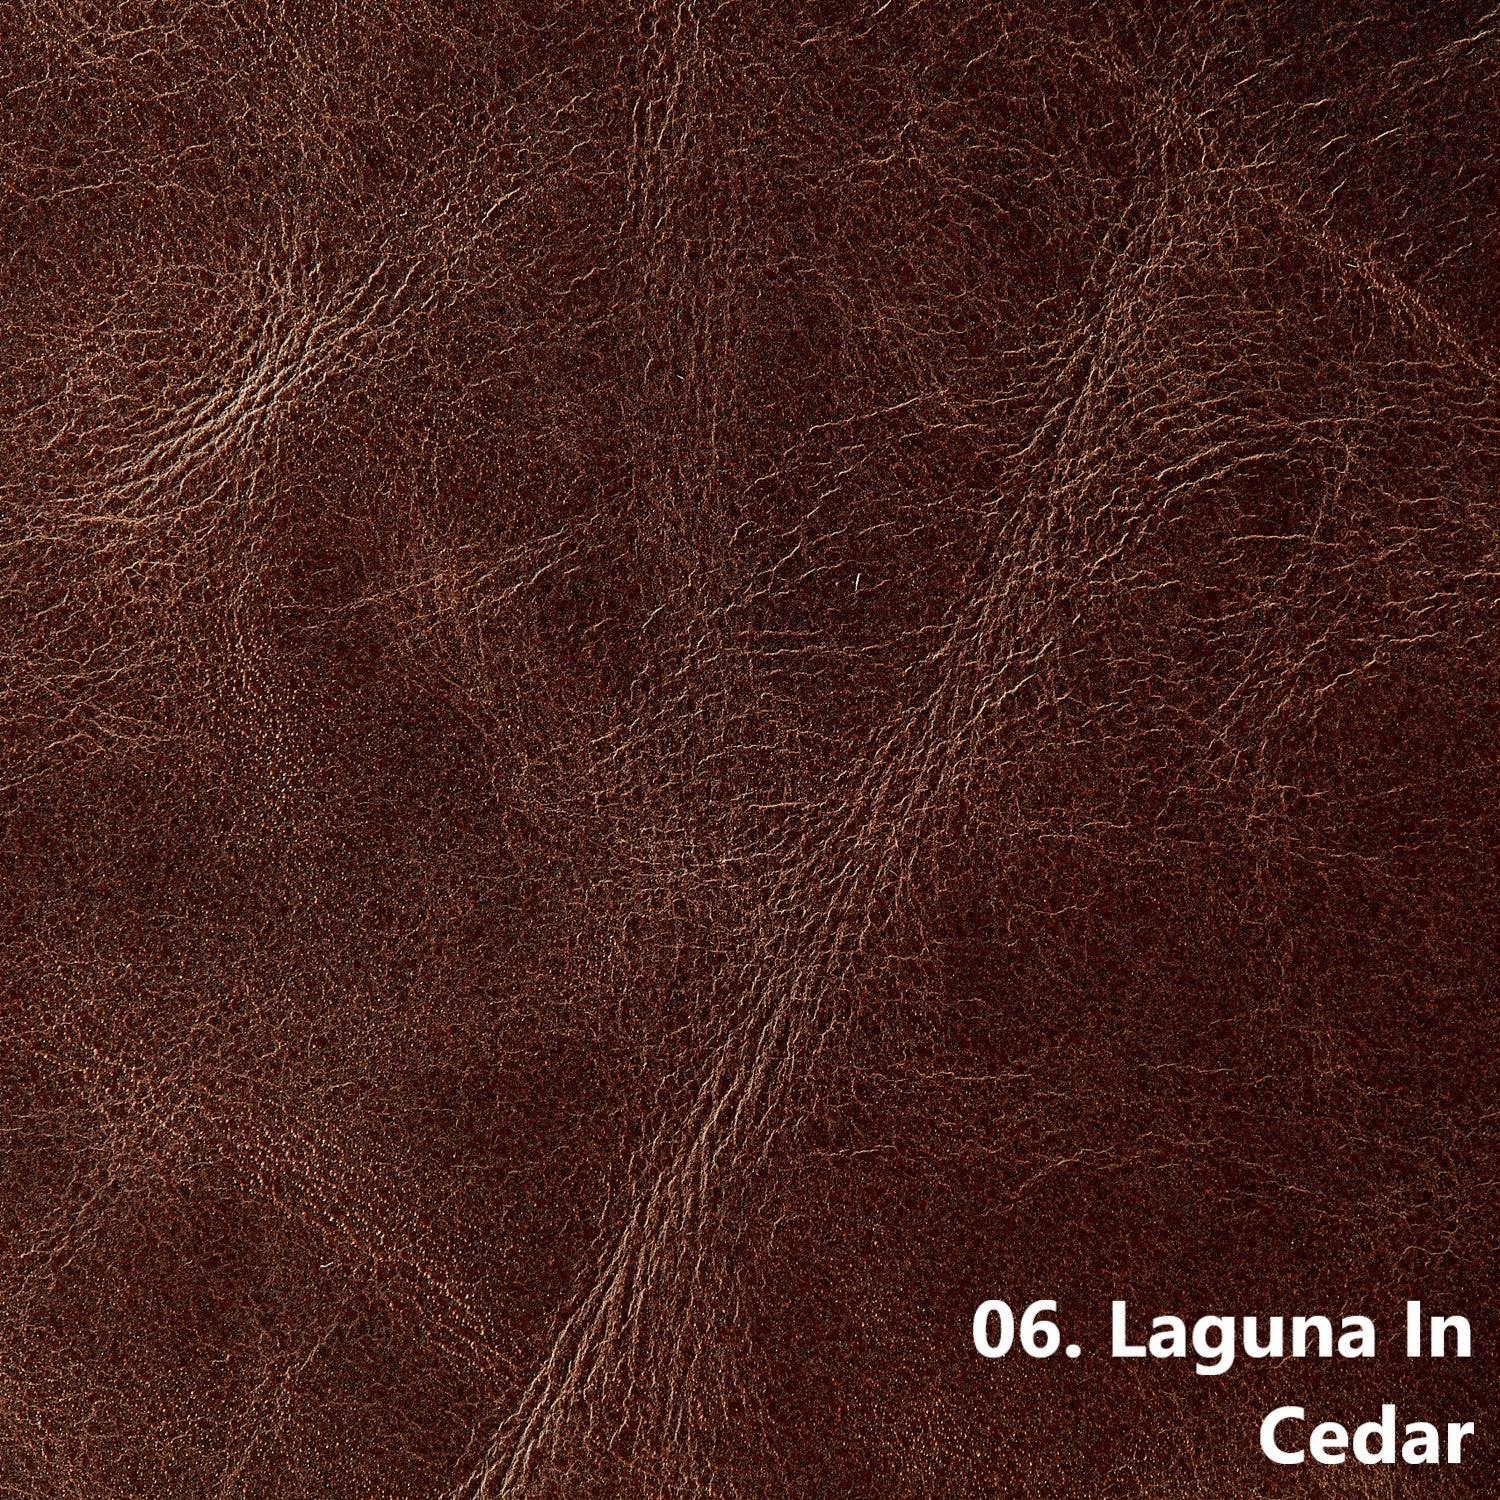 Sepia Laguna Leather stain---HELP